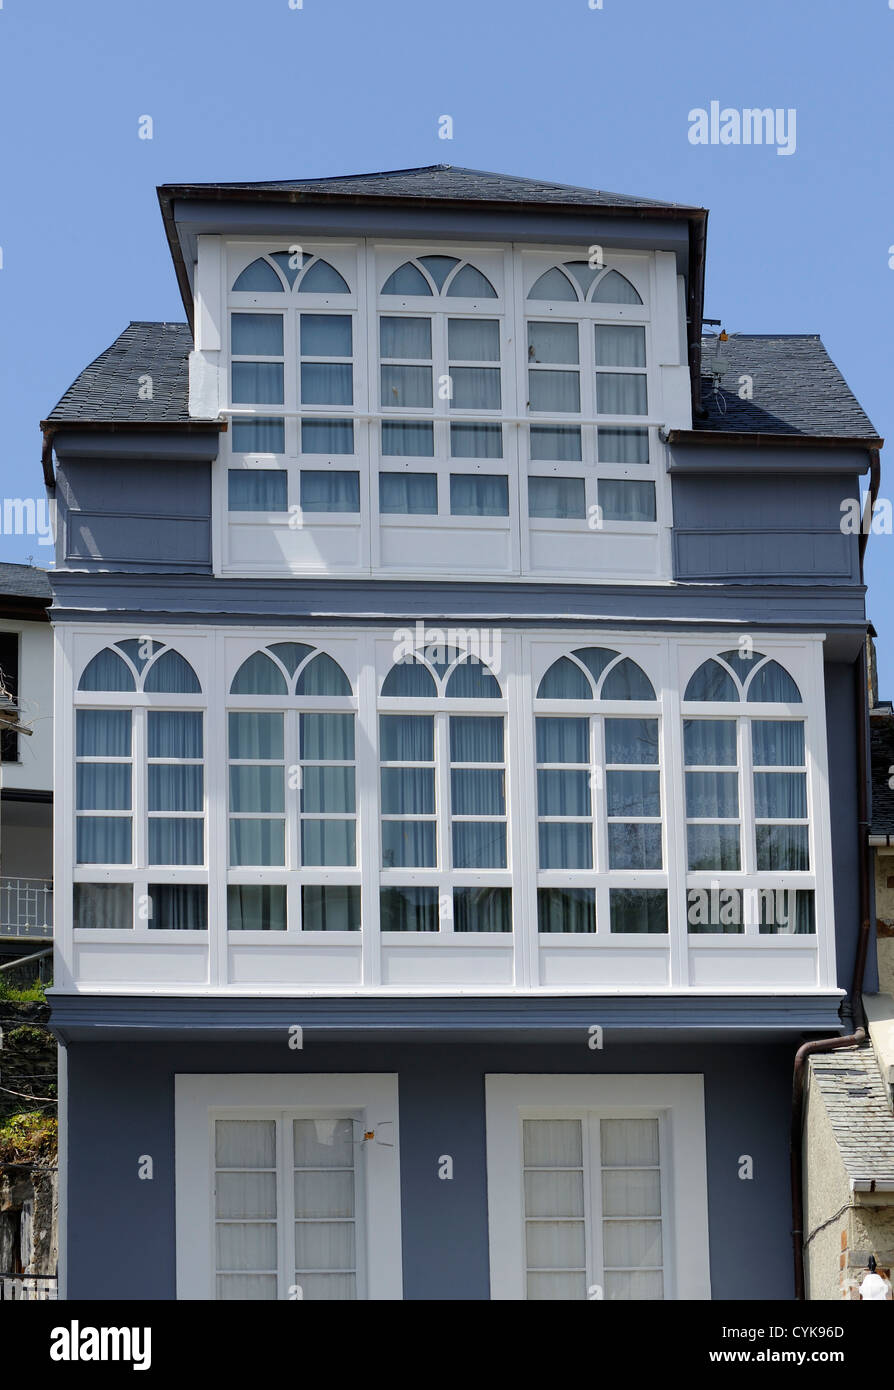 A harbour side house with traditional glazed window balconies, galerías. Luarca, Asturias, Spain. Stock Photo